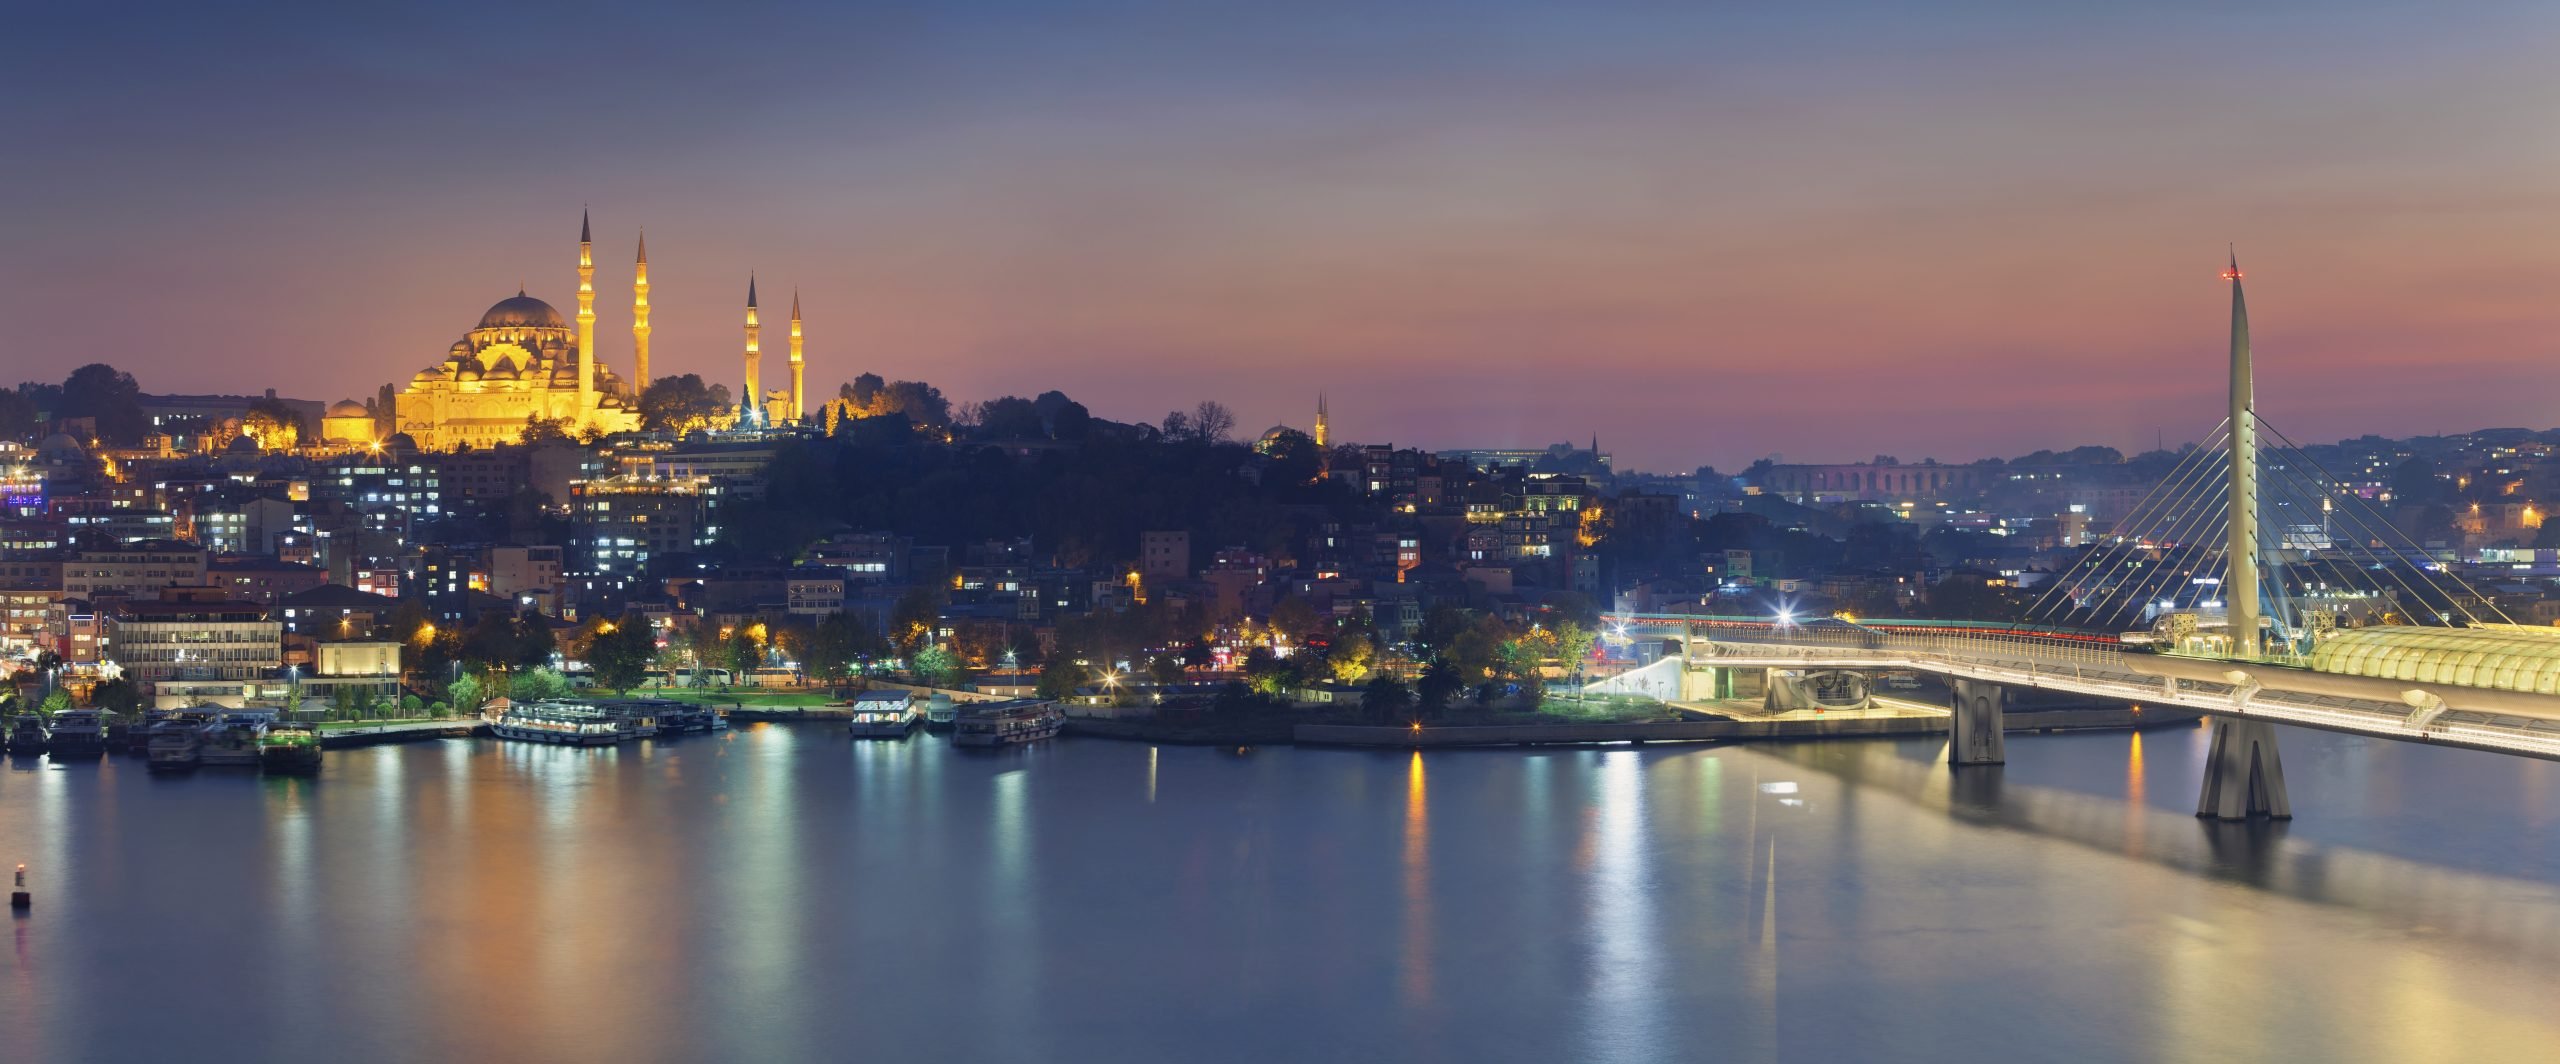 Istanbul by Night, Turkey  - Celestyal Cruises